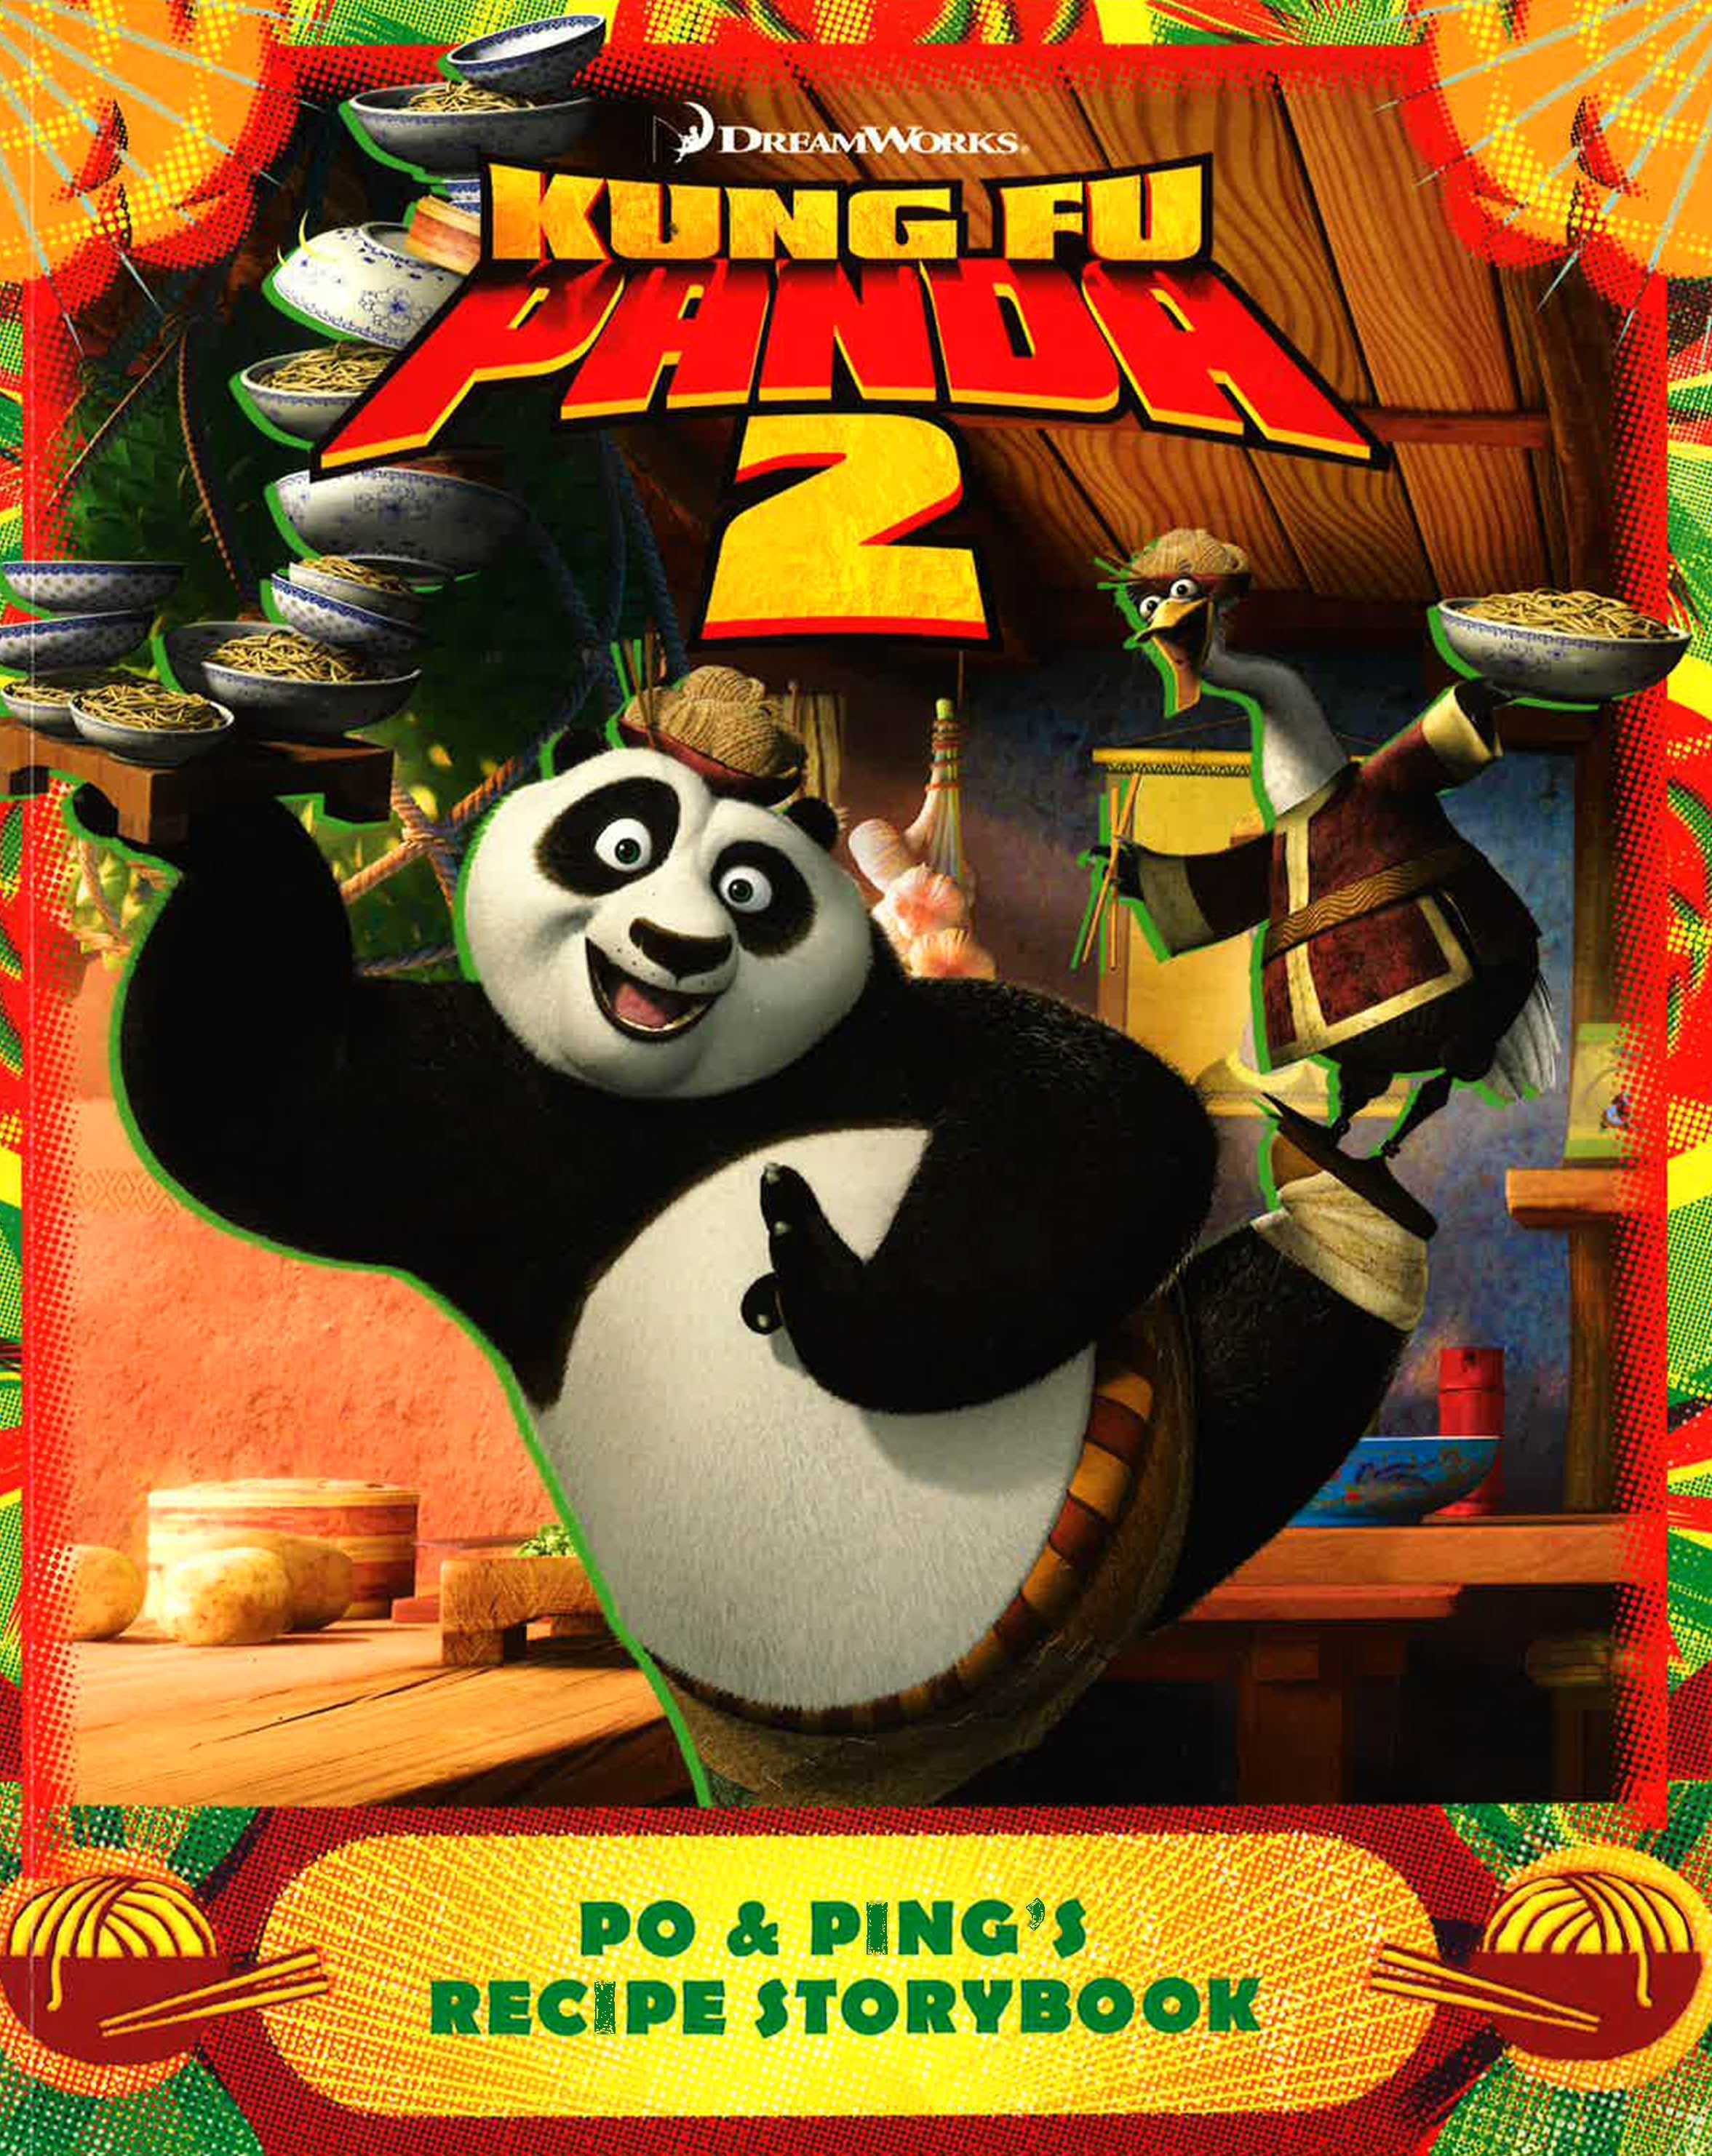 Po & Ping's Recipe Storybook (Kung Fu Panda 2) – BookXcess